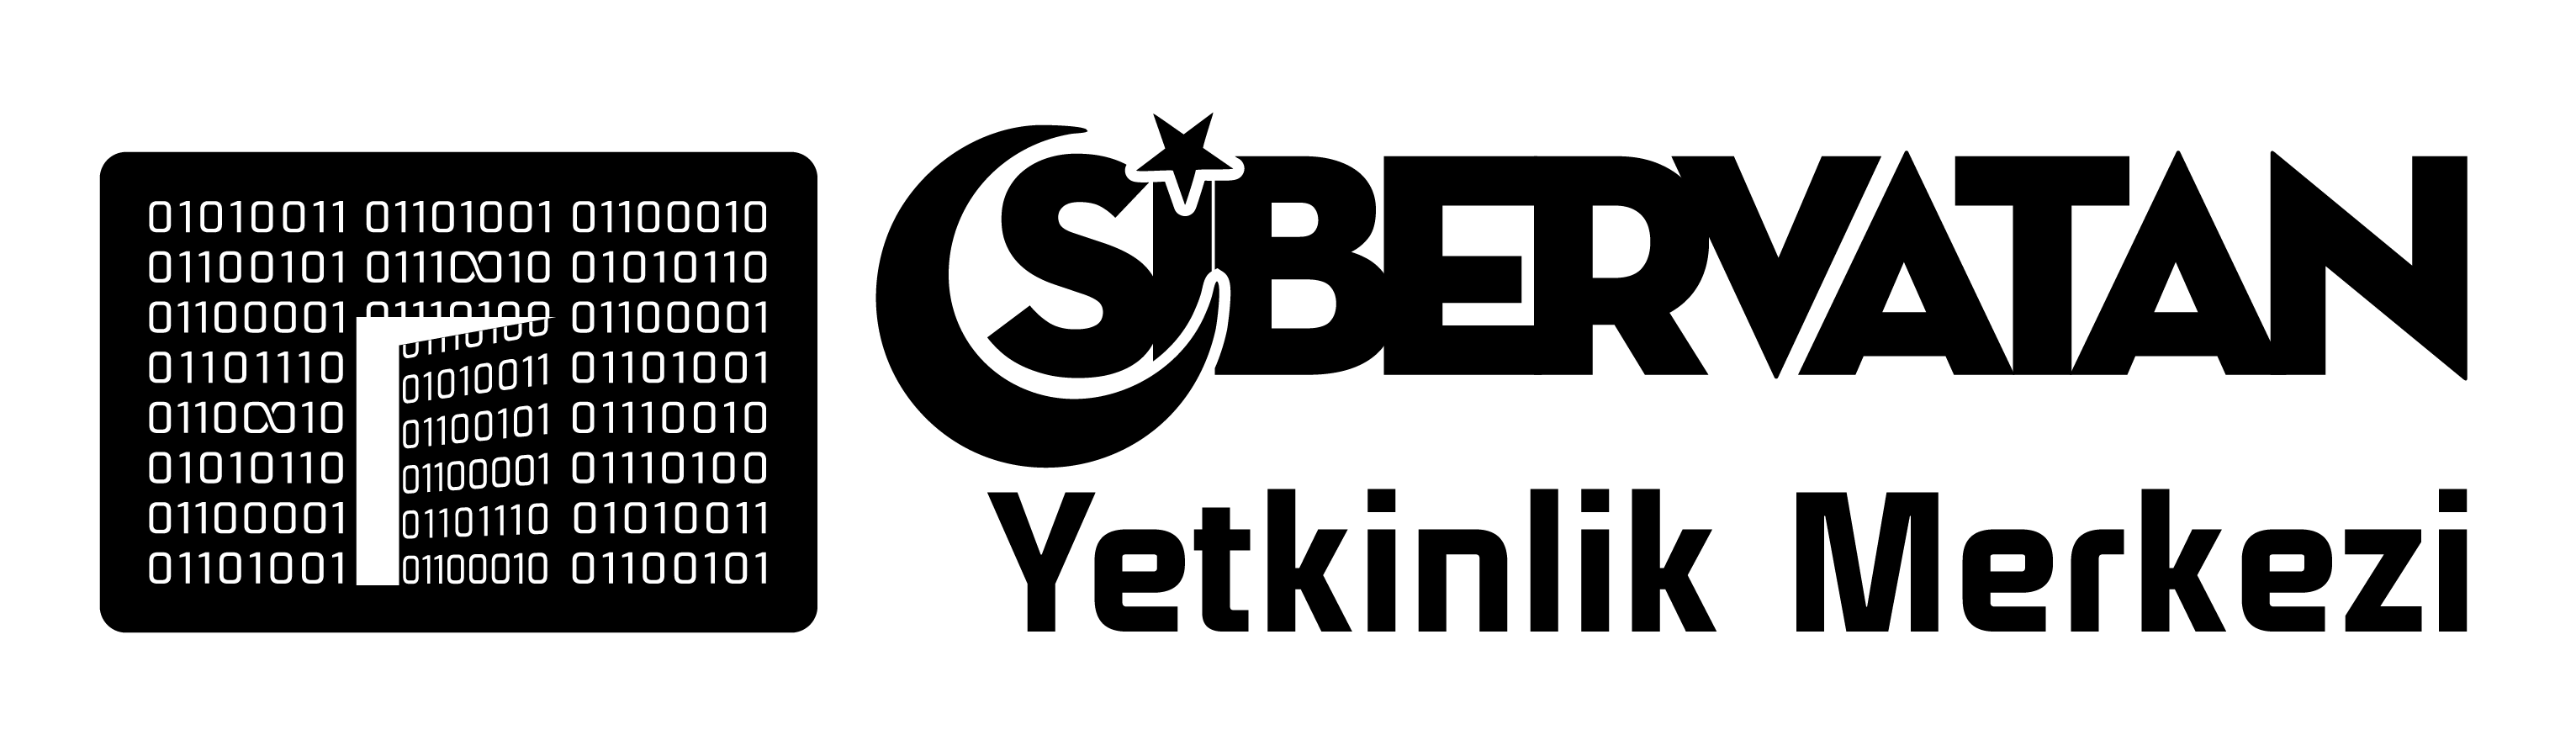 Yetkinlik Merkezi Logo